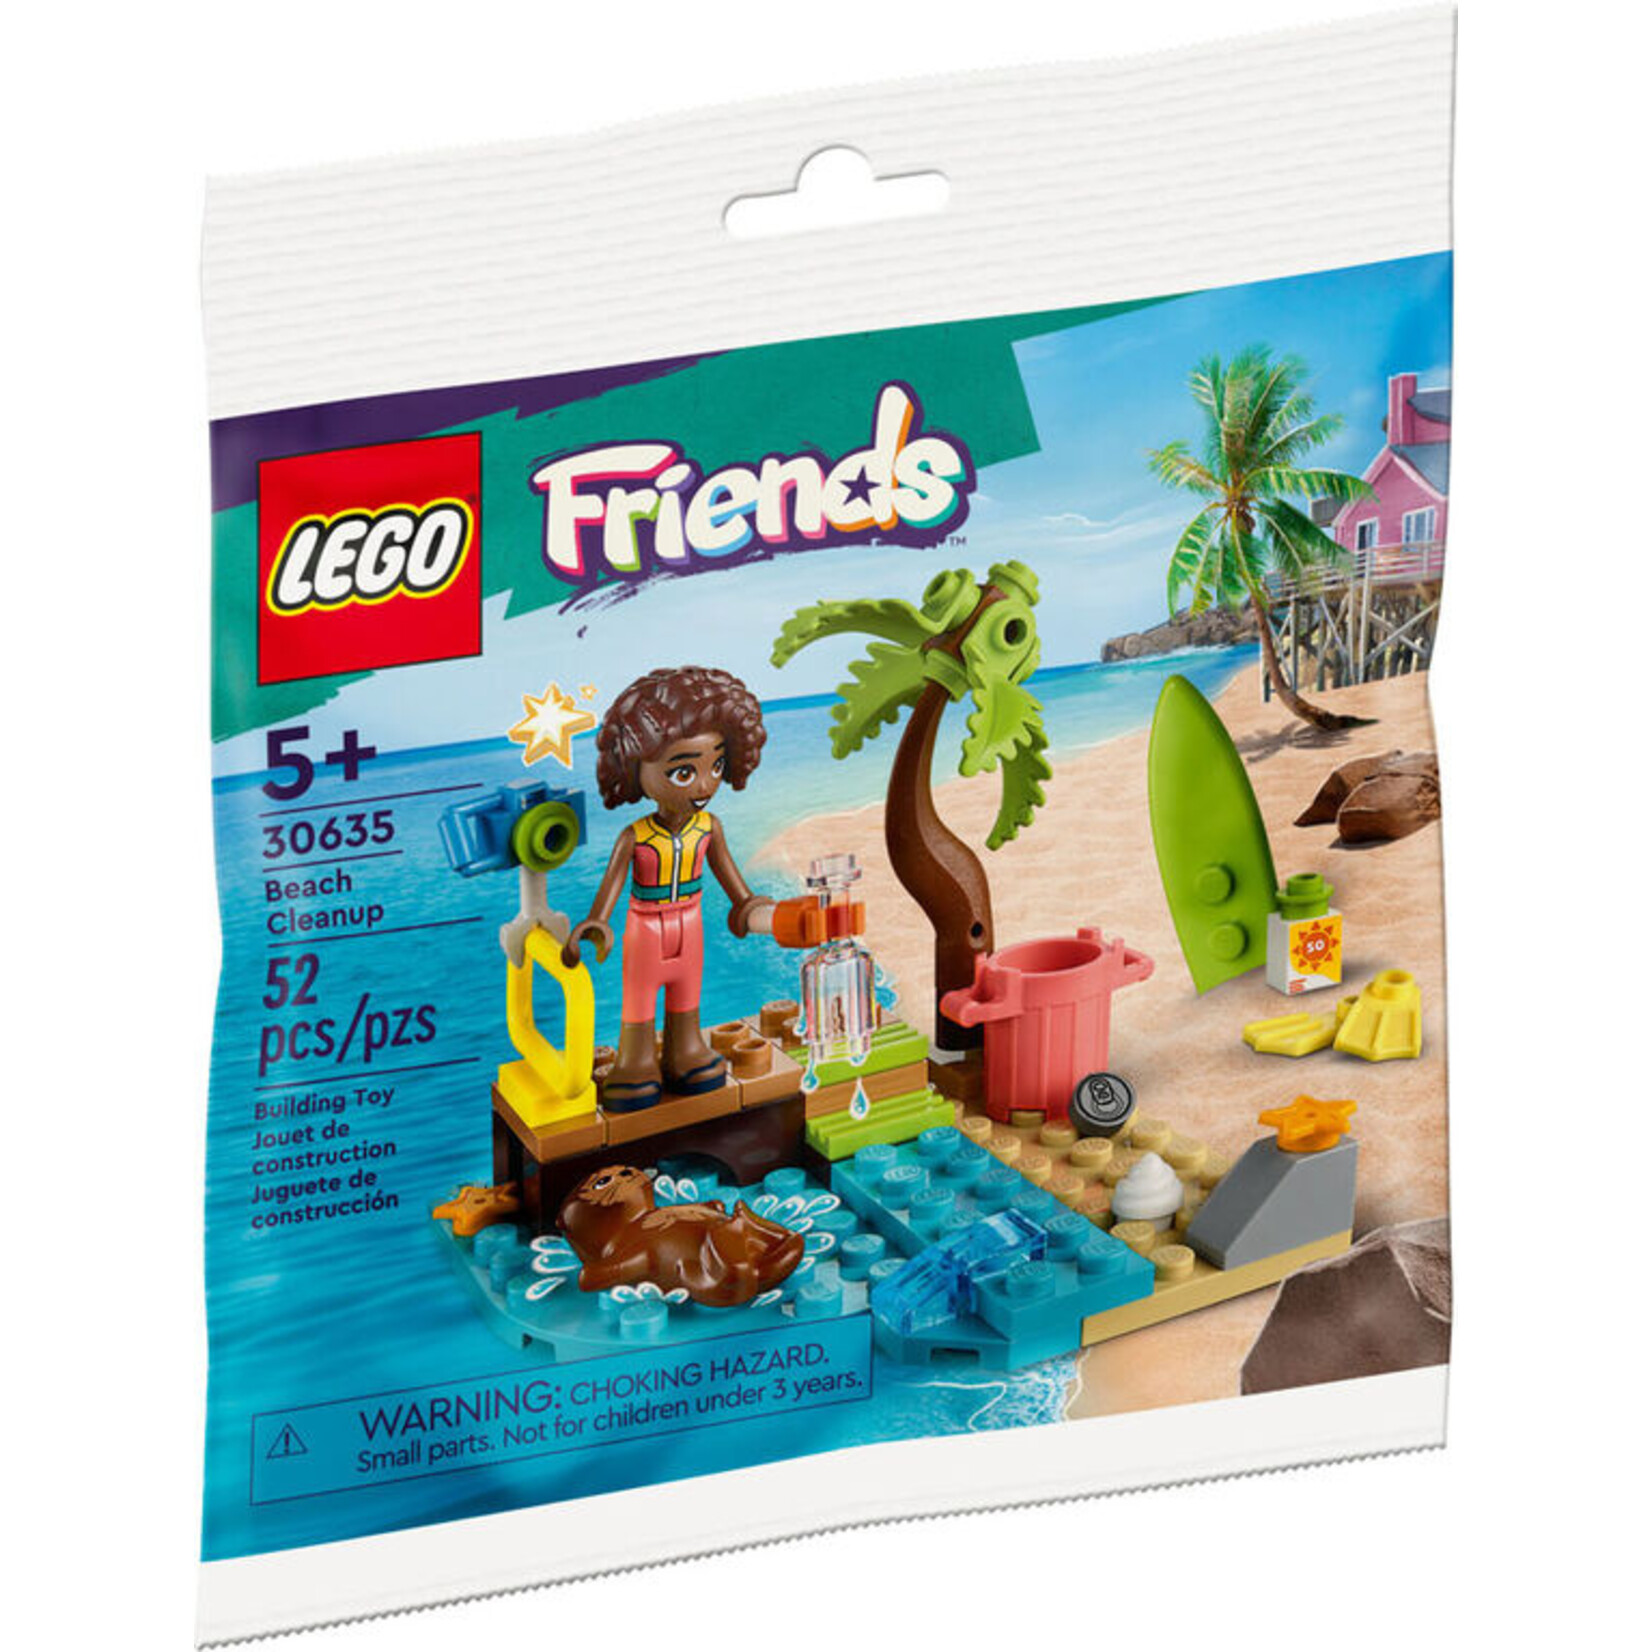 LEGO Lego friends beach clean up, 52pcs